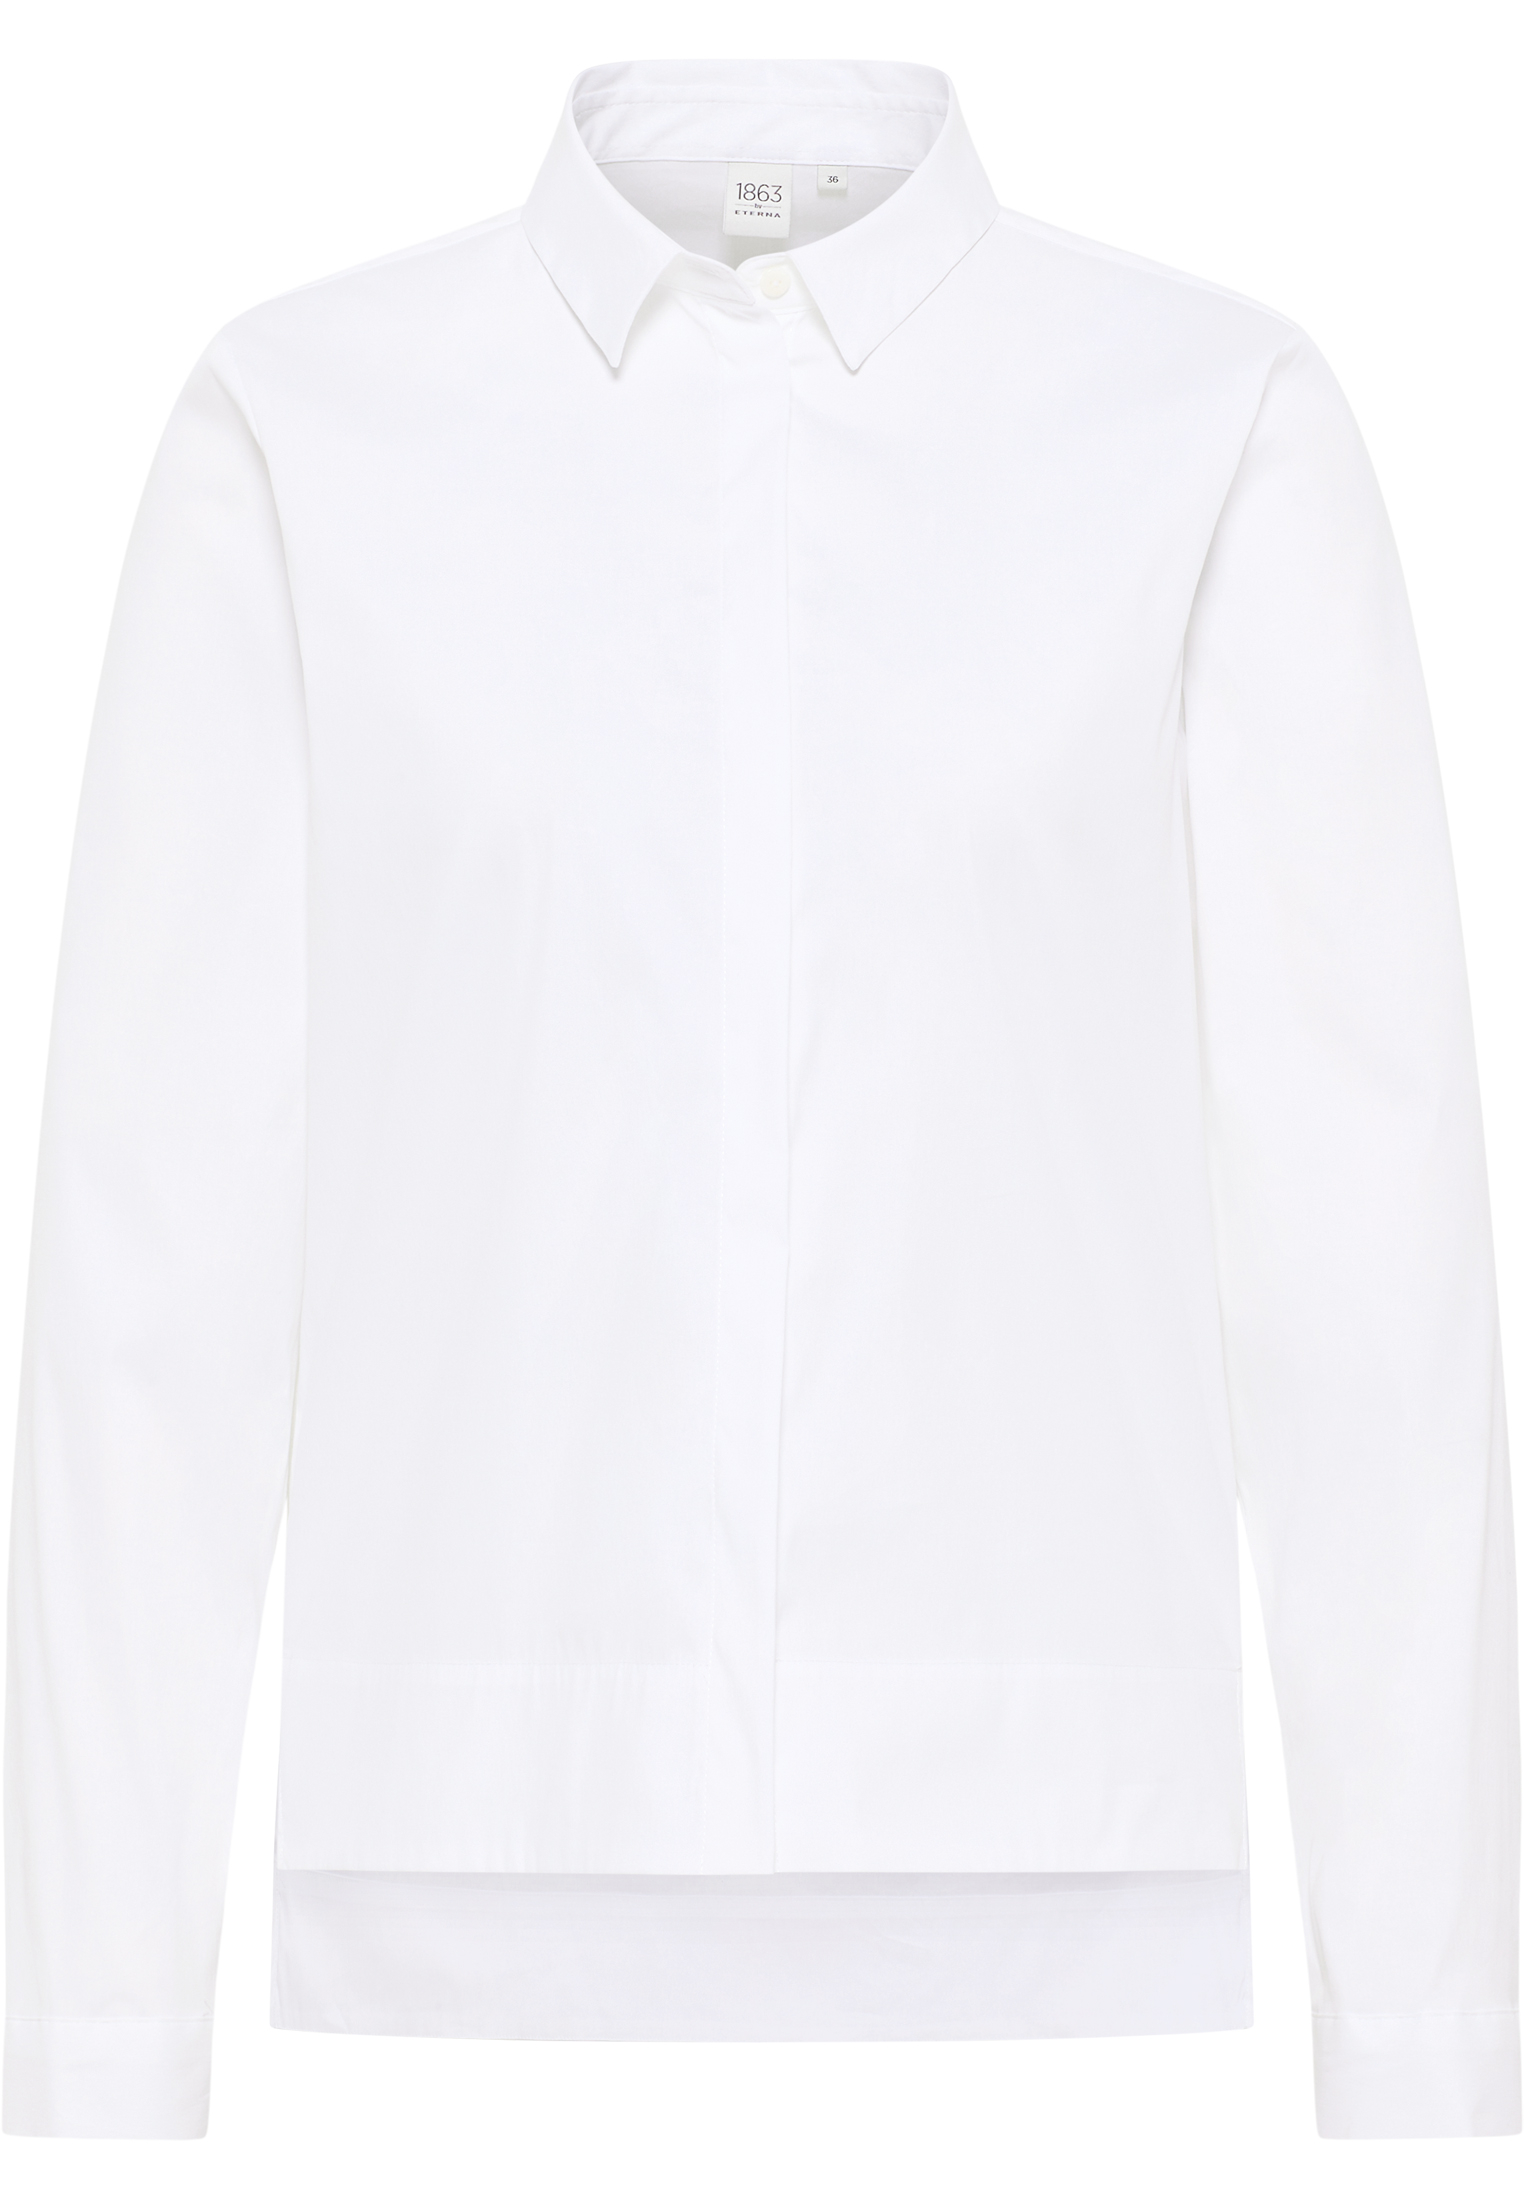 Signature Shirt Blouse blanc uni